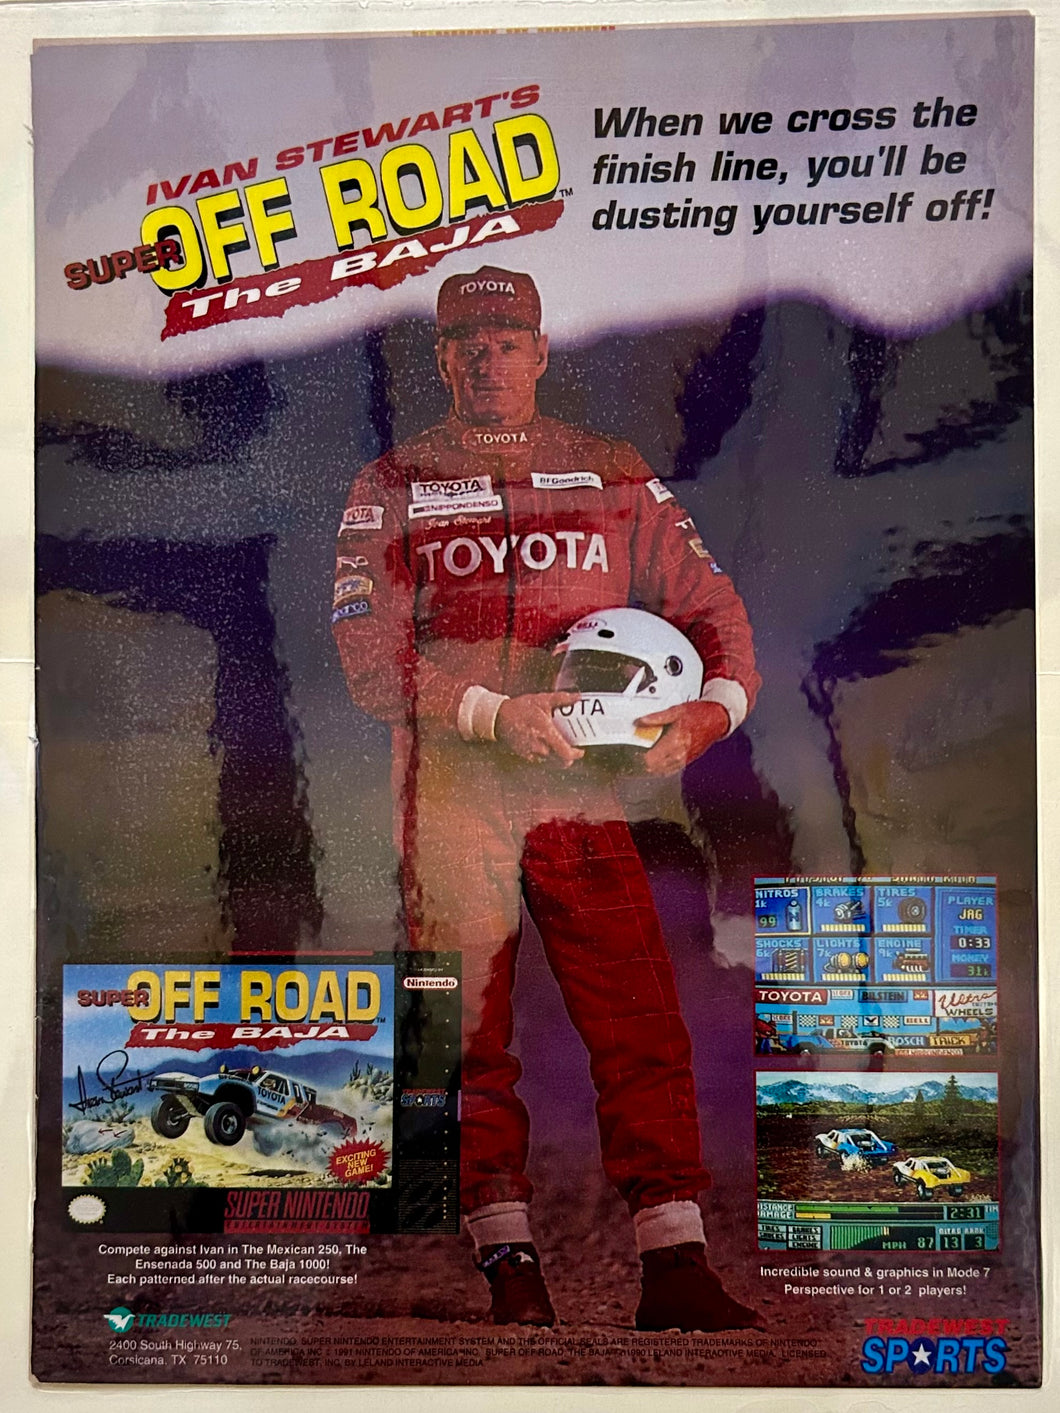 Super Off Road: The Baja - SNES - Original Vintage Advertisement - Print Ads - Laminated A4 Poster